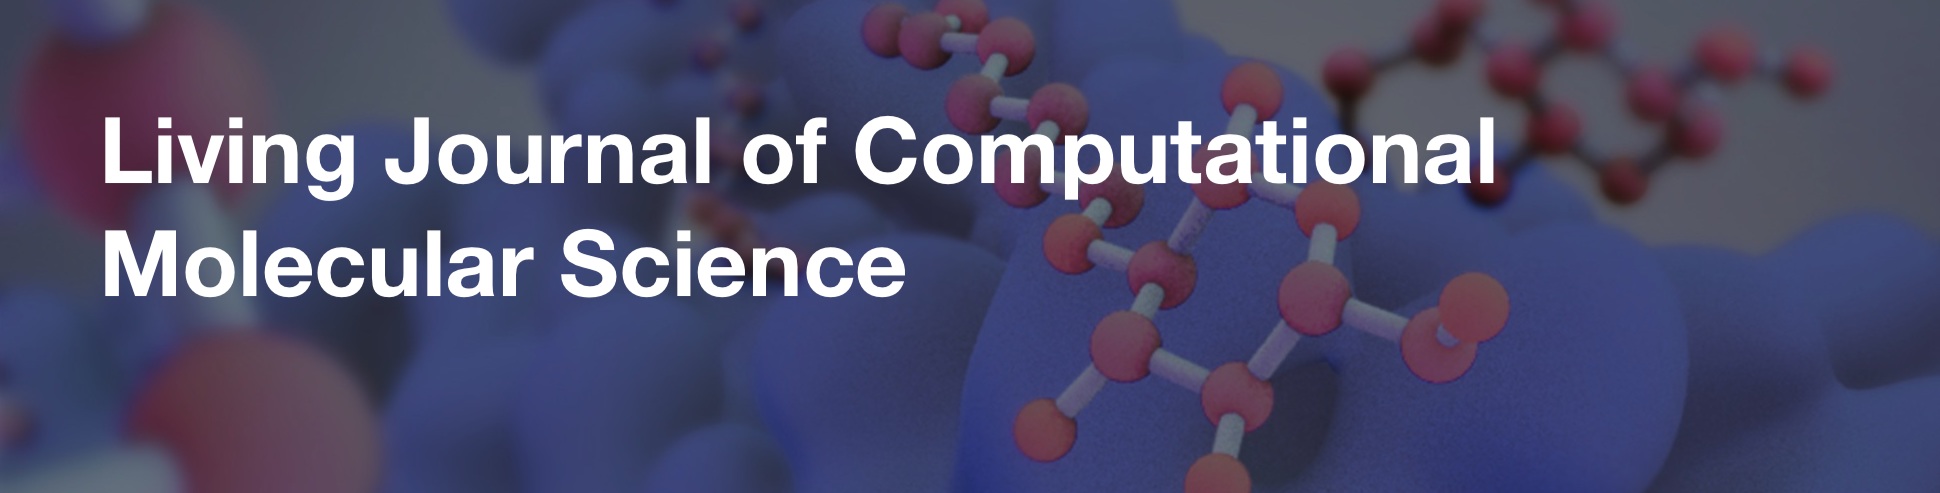 Living Journal of Computational Molecular Science